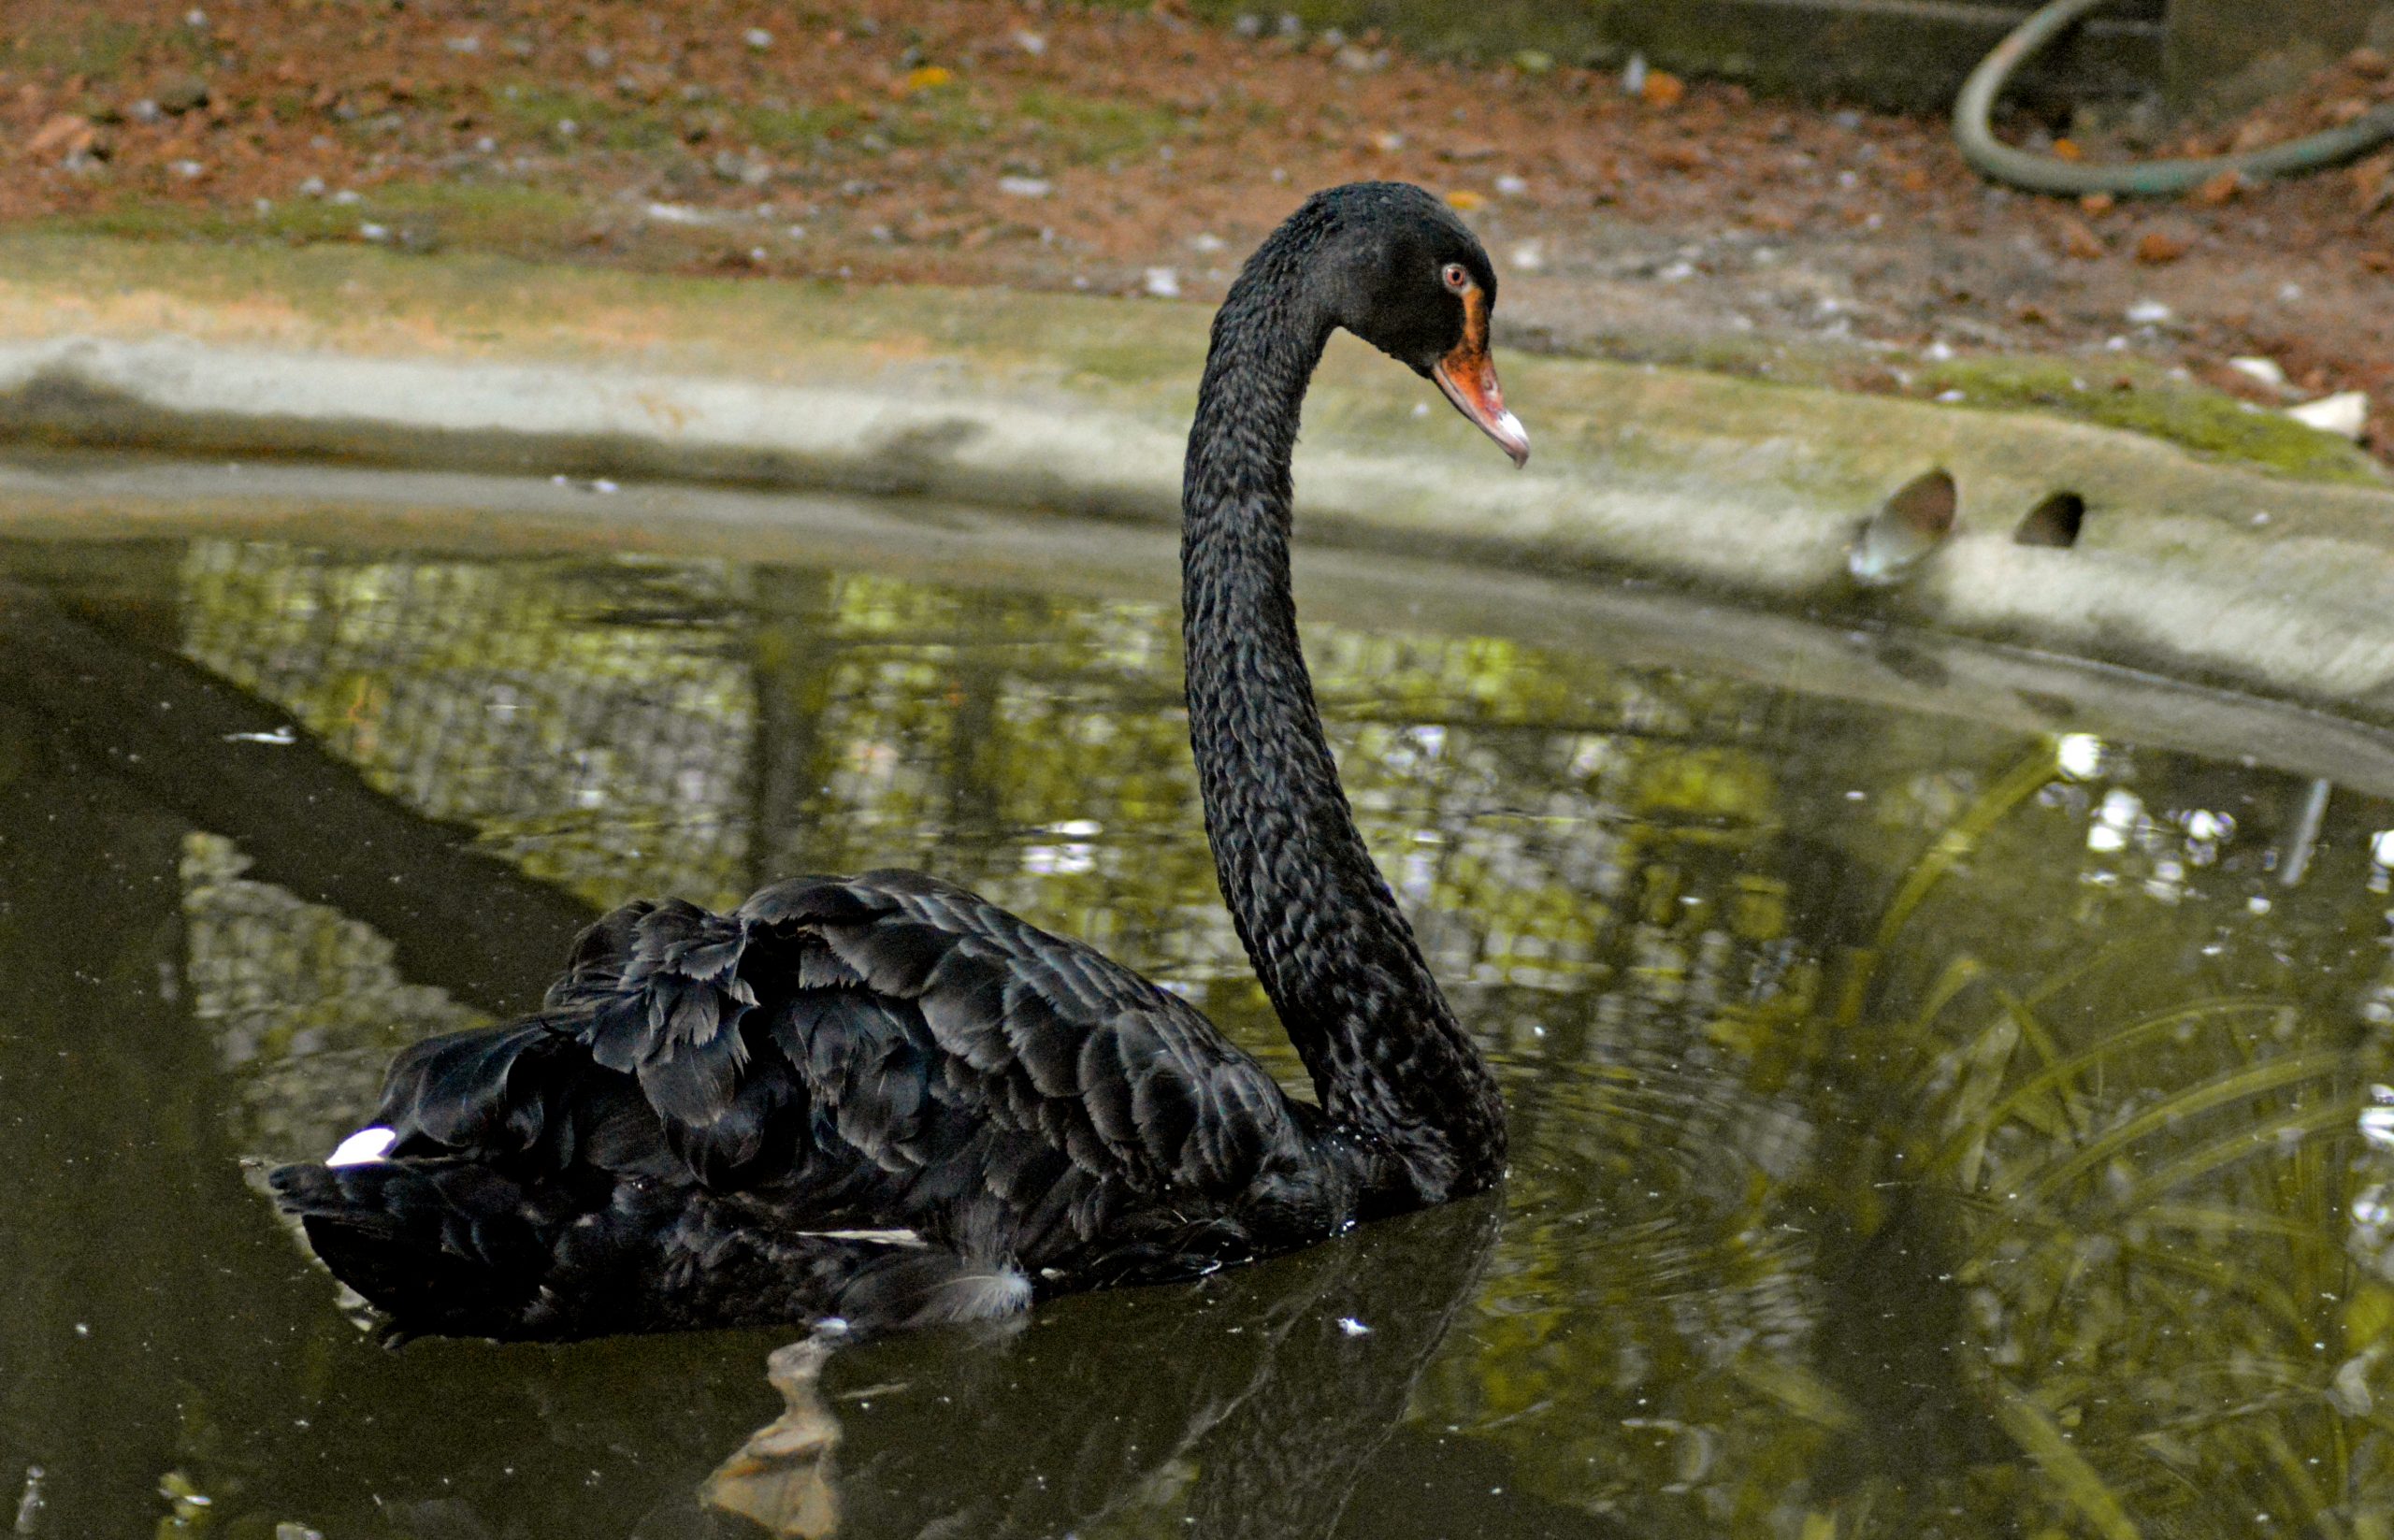 A black swan in pond